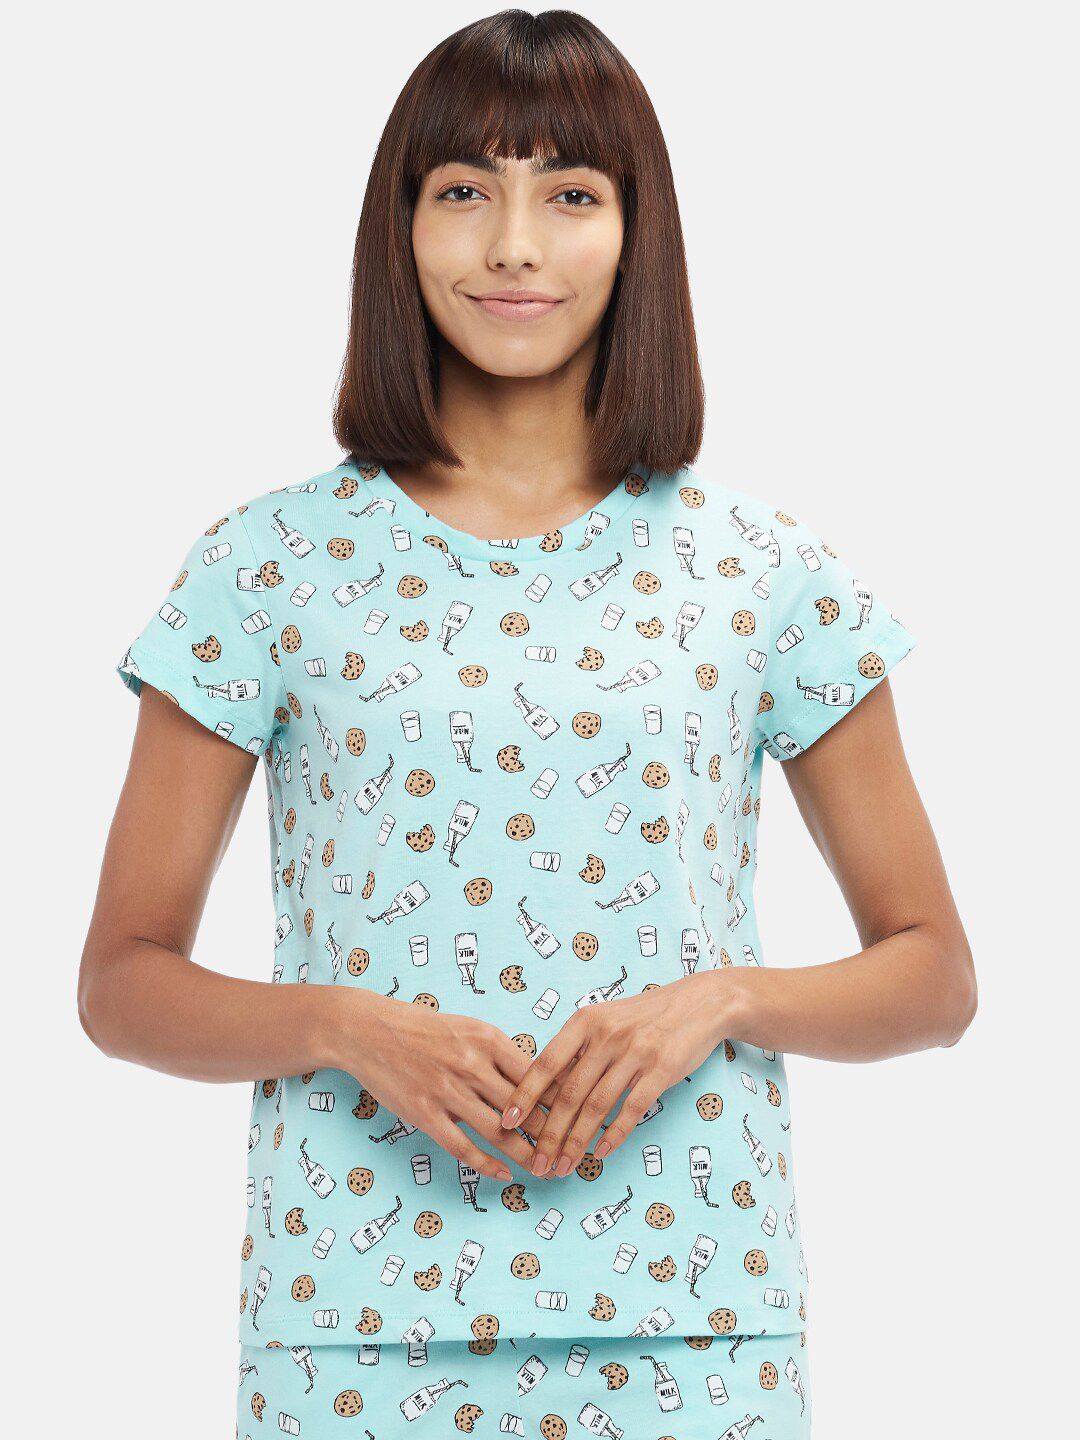 Dreamz by Pantaloons Aqua Blue Conversational Print Round Neck Regular Sleeves Cotton Lounge tshirt Price in India